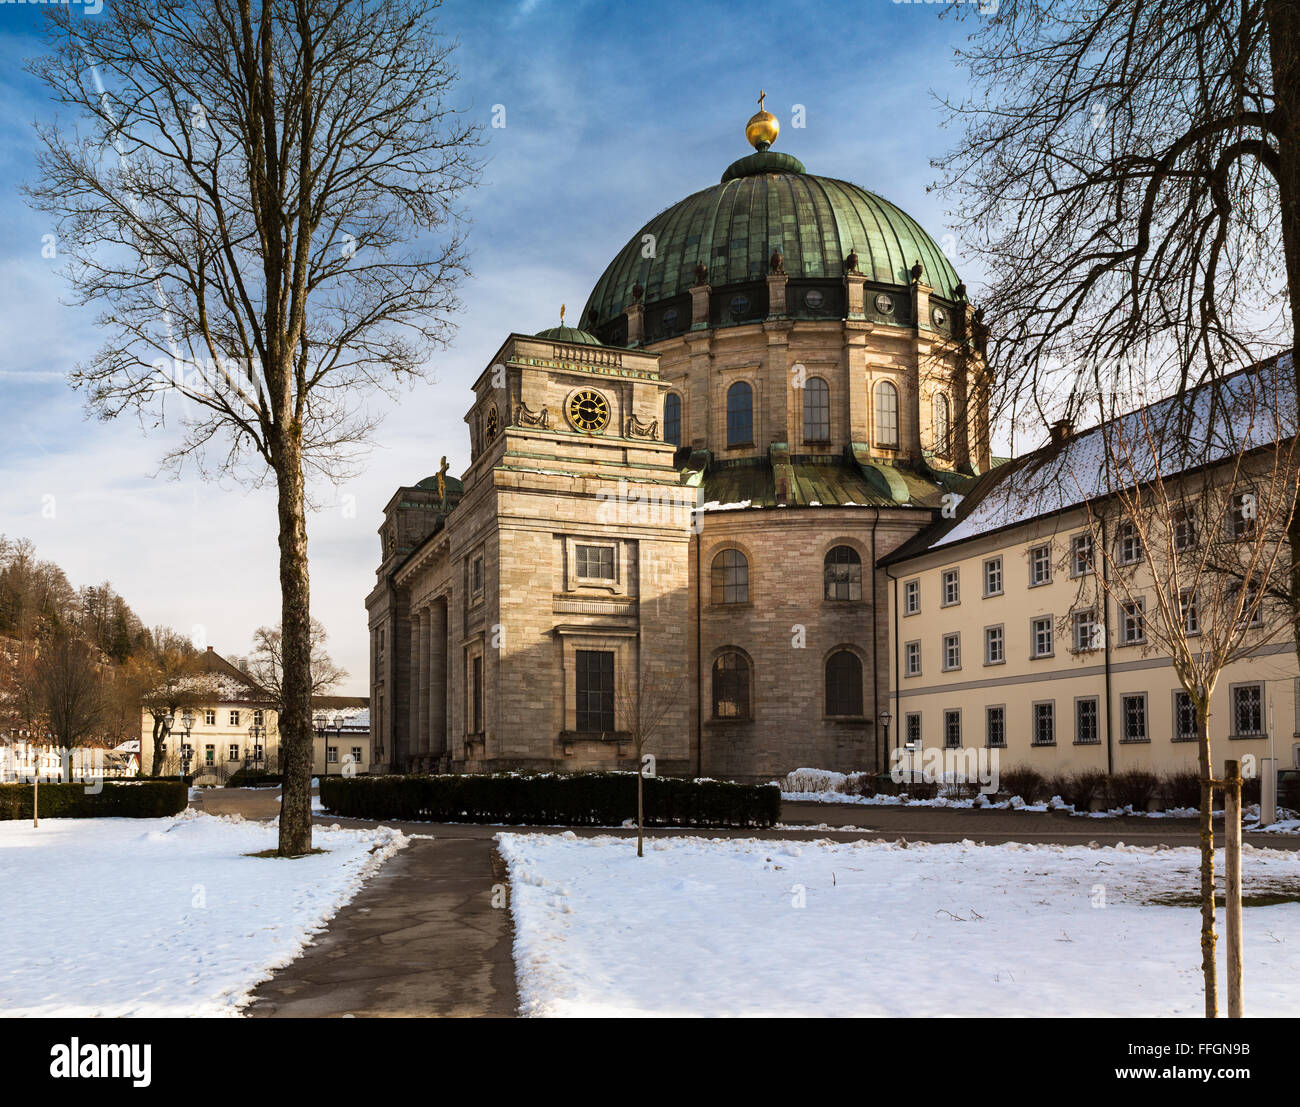 St. Blaise Abbey (Kloster St. Blasien), Black Forest, Germany Stock Photo